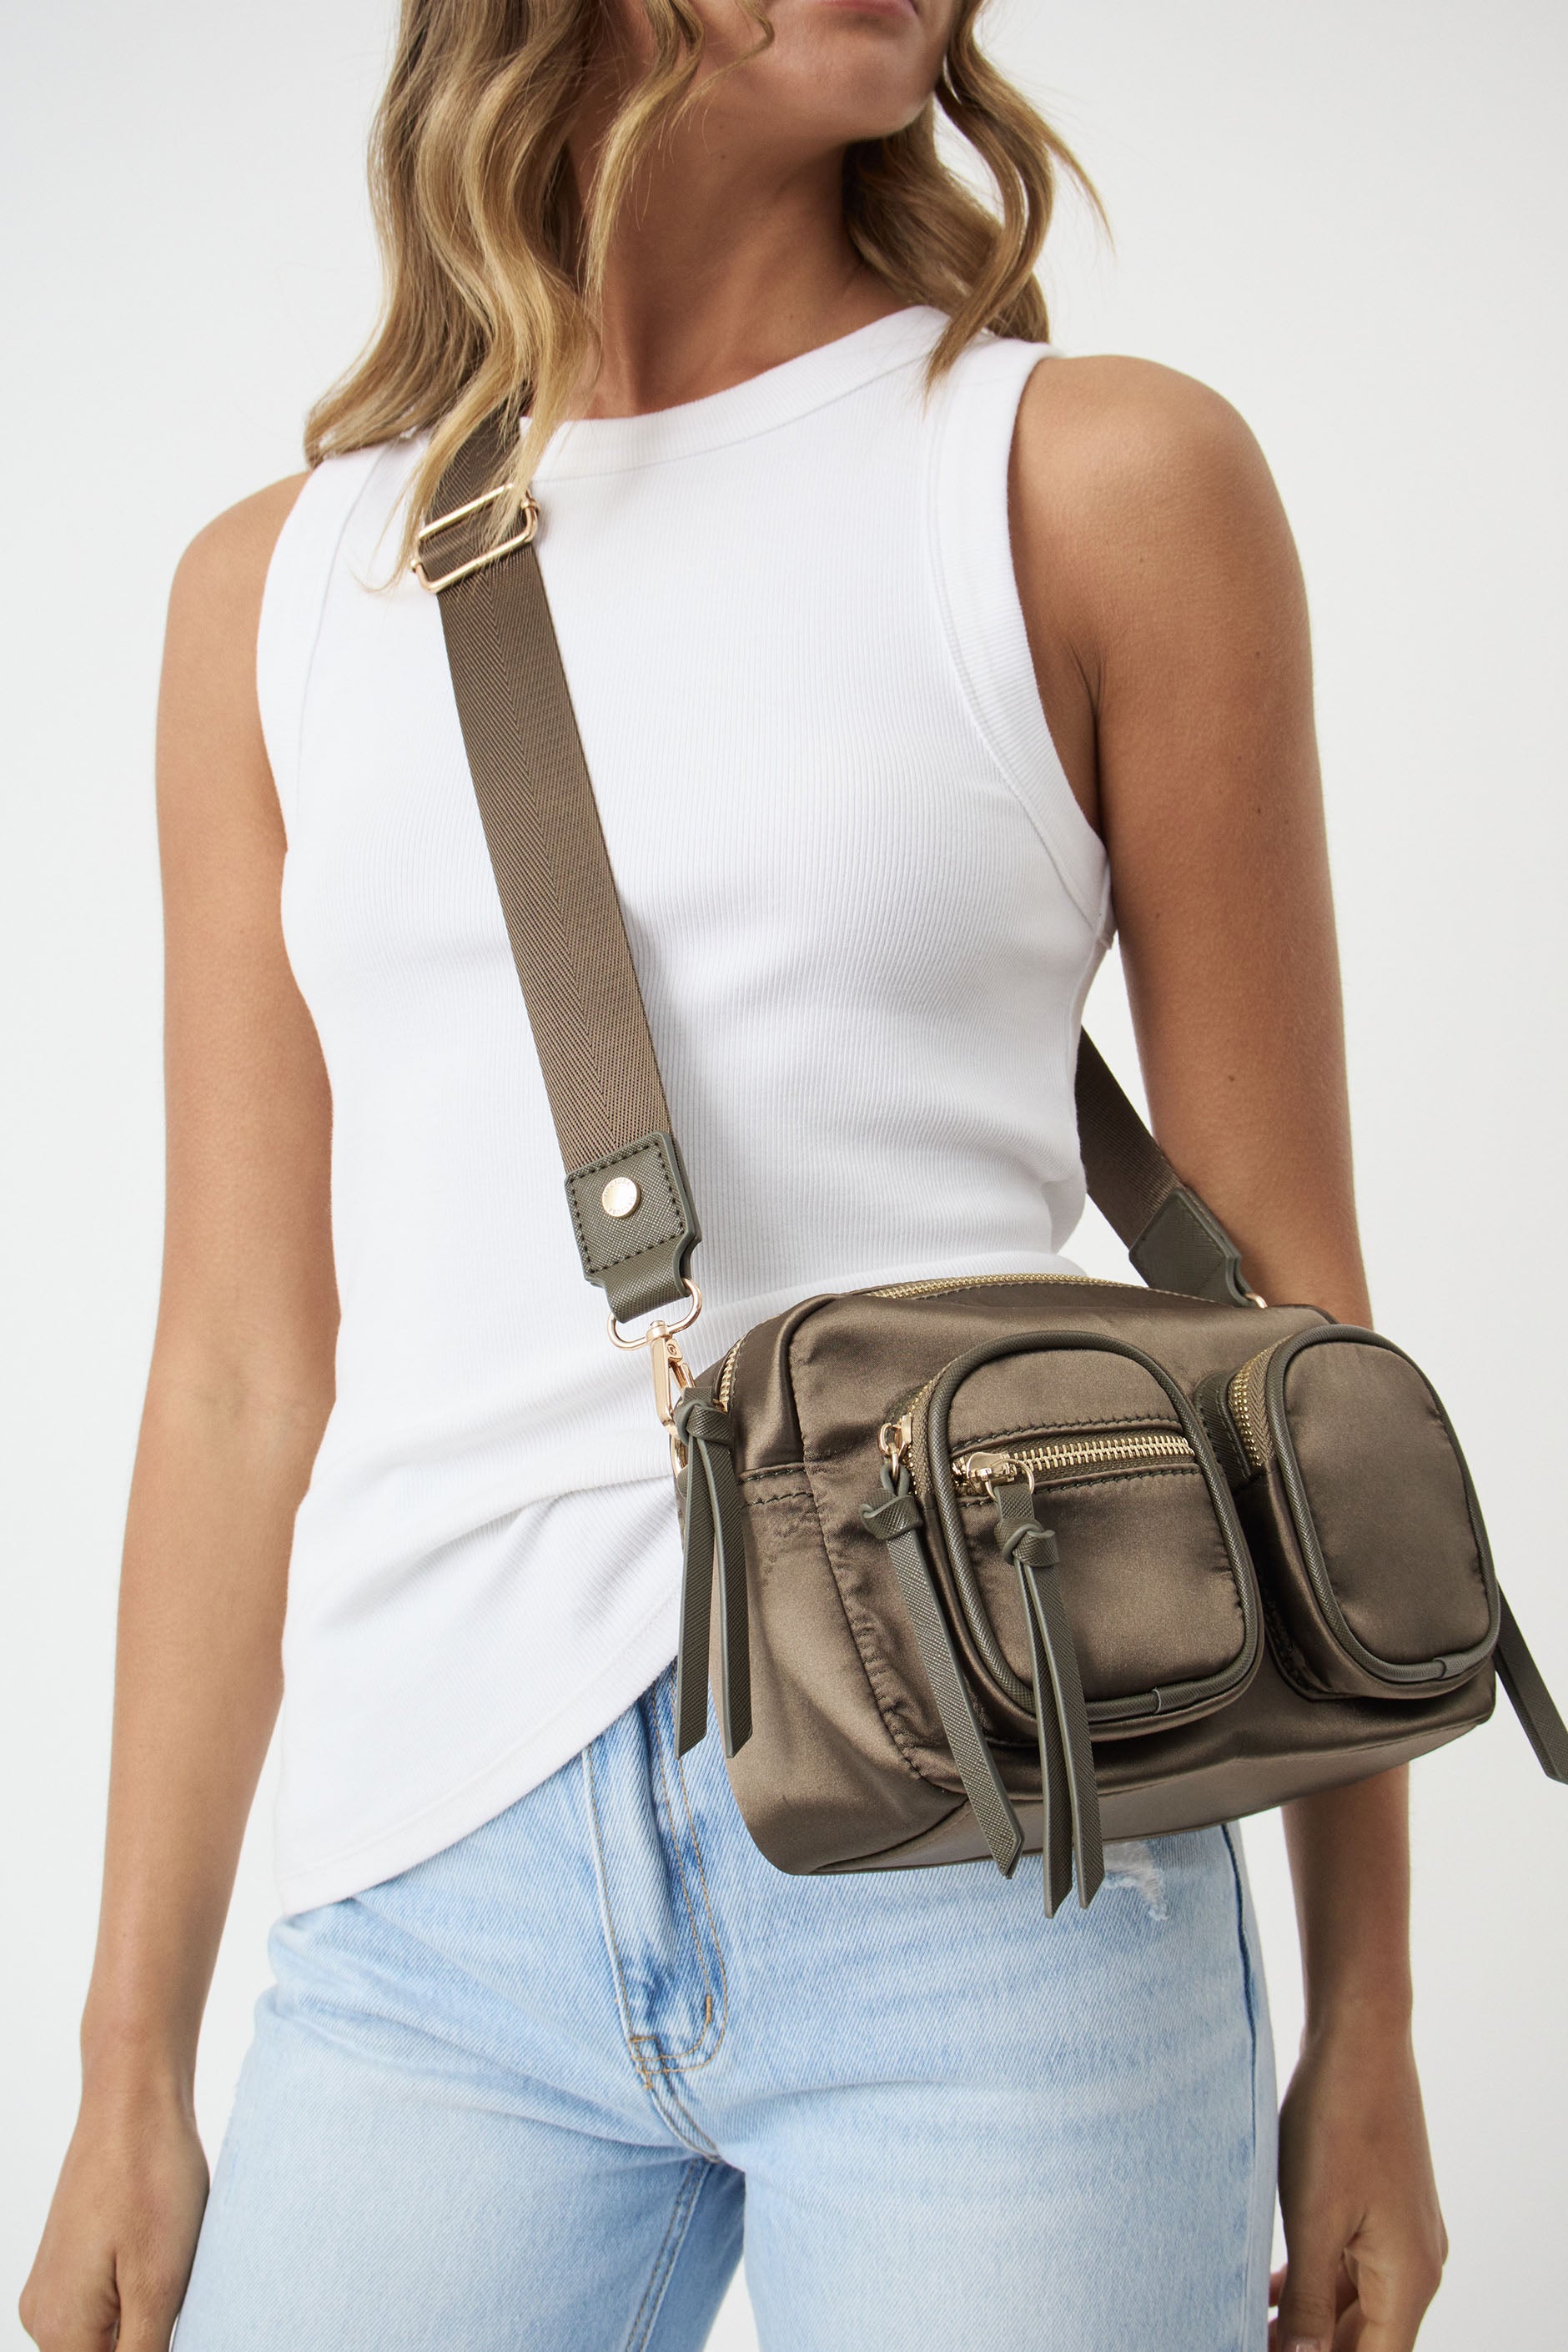 Women's Nicole Miller Designer Quilted Nylon Crossbody Bag